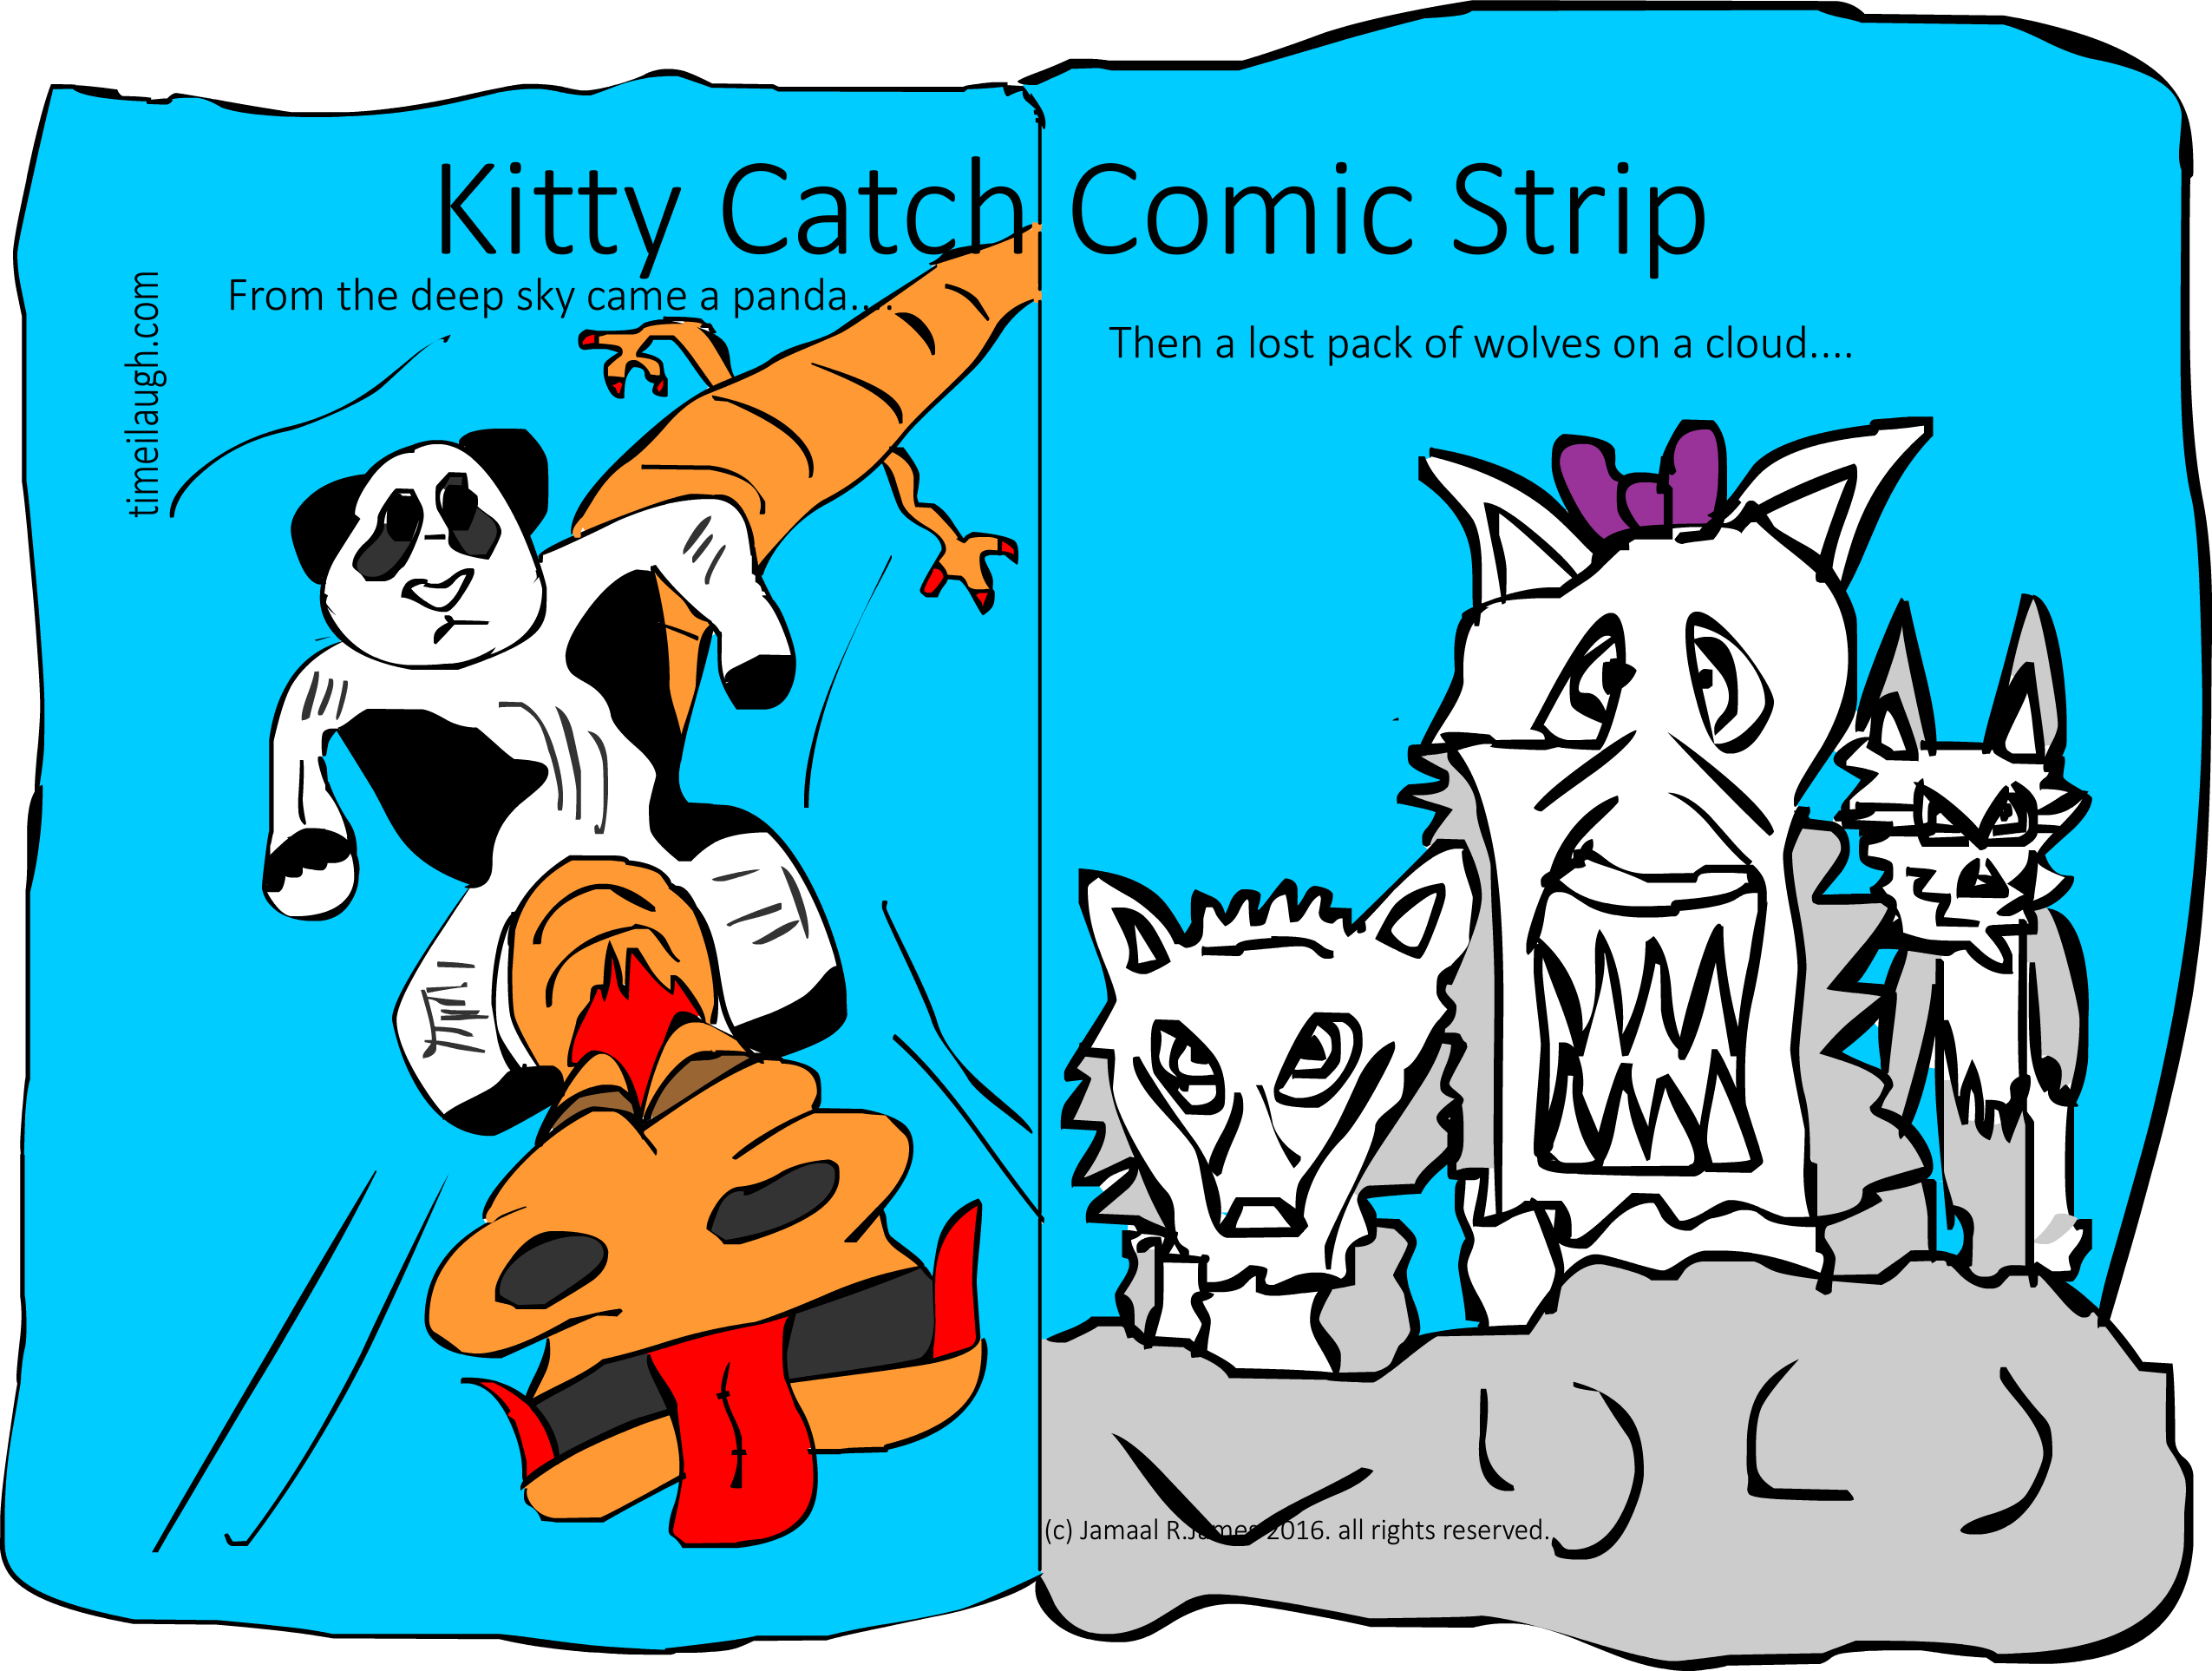 Kitty Catch Comic Strip Kittycatchasuki Gets Attacked - Cartoon (2550x1926)